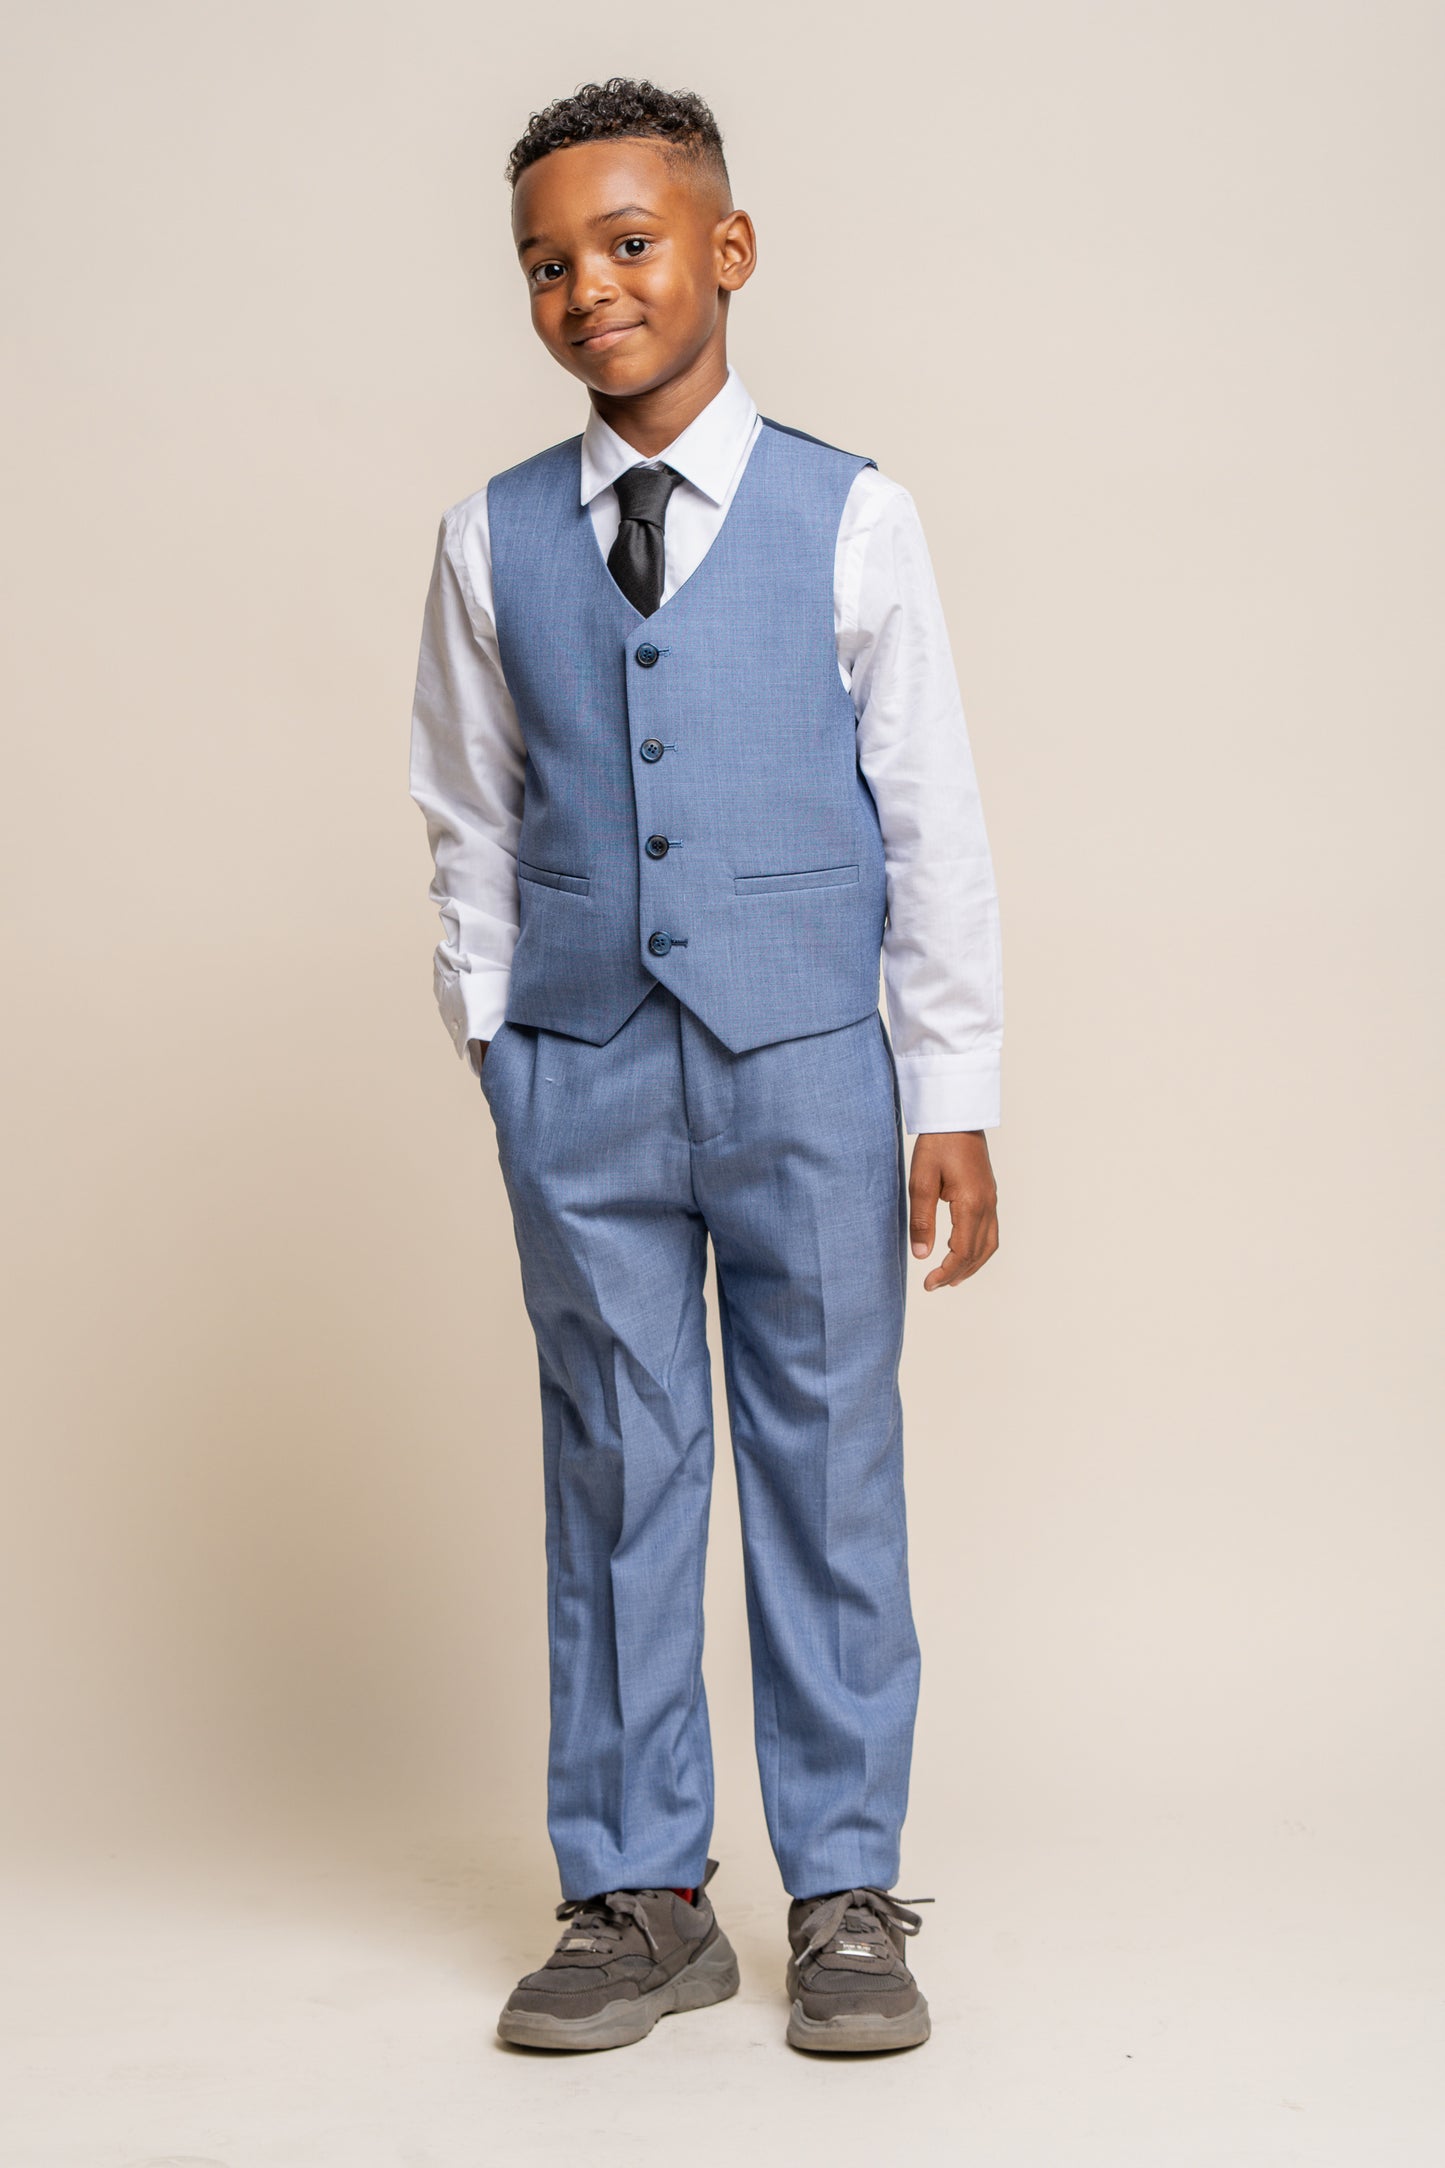 Blue Jay Boys 3 Piece Wedding Suit